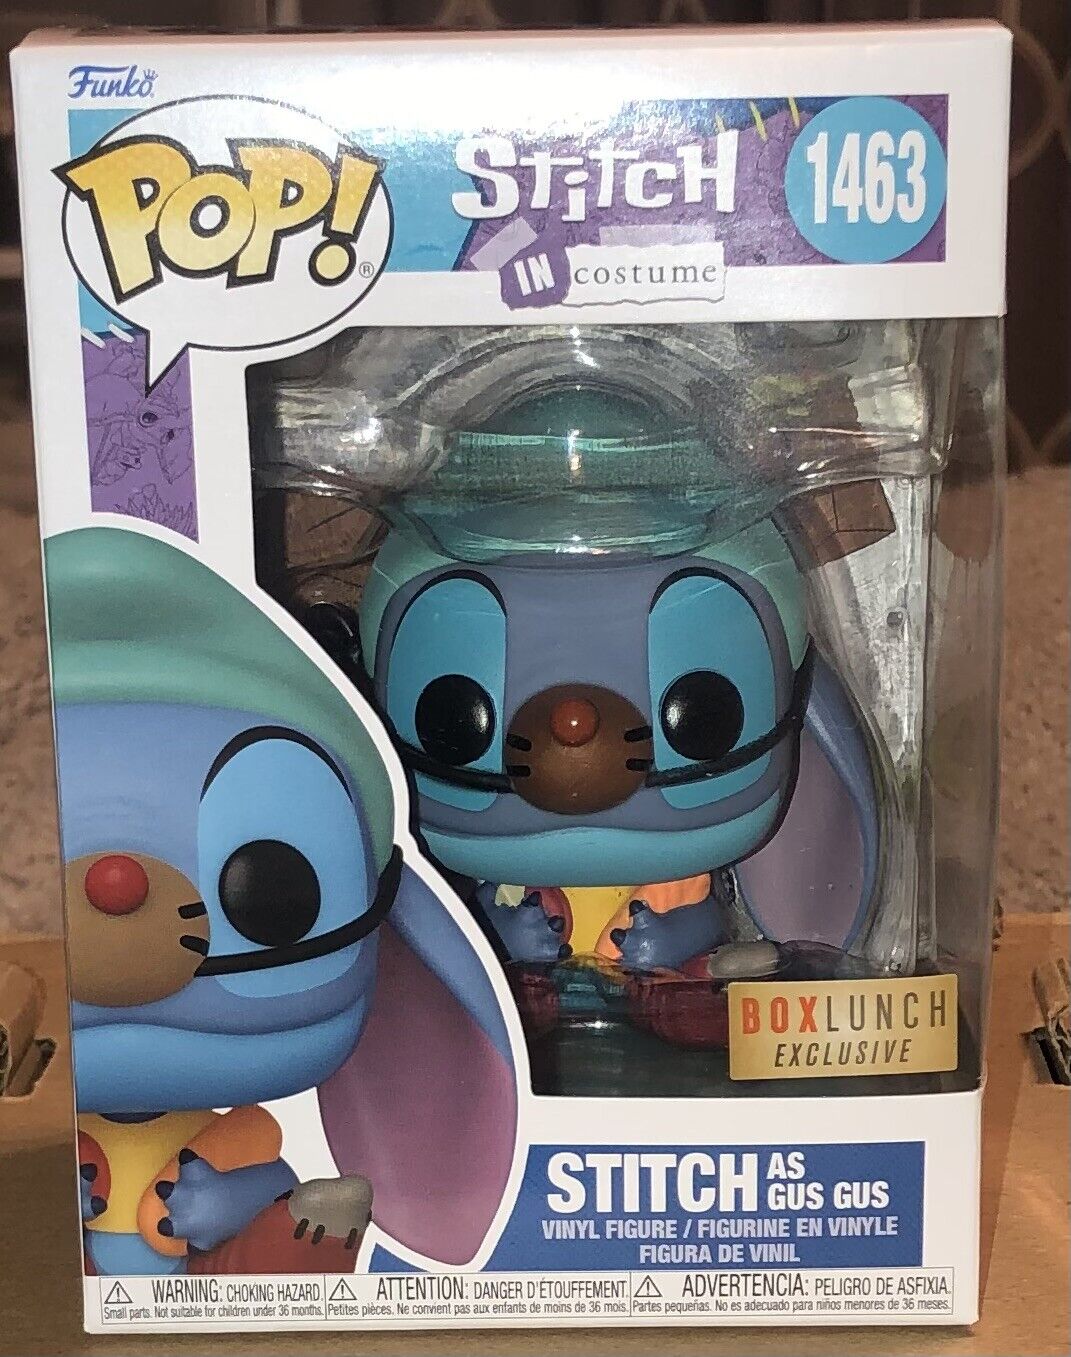 Funko Pop Disney #1463 Stitch As Gus Gus Stitch In Costume Box Lunch Exclusive